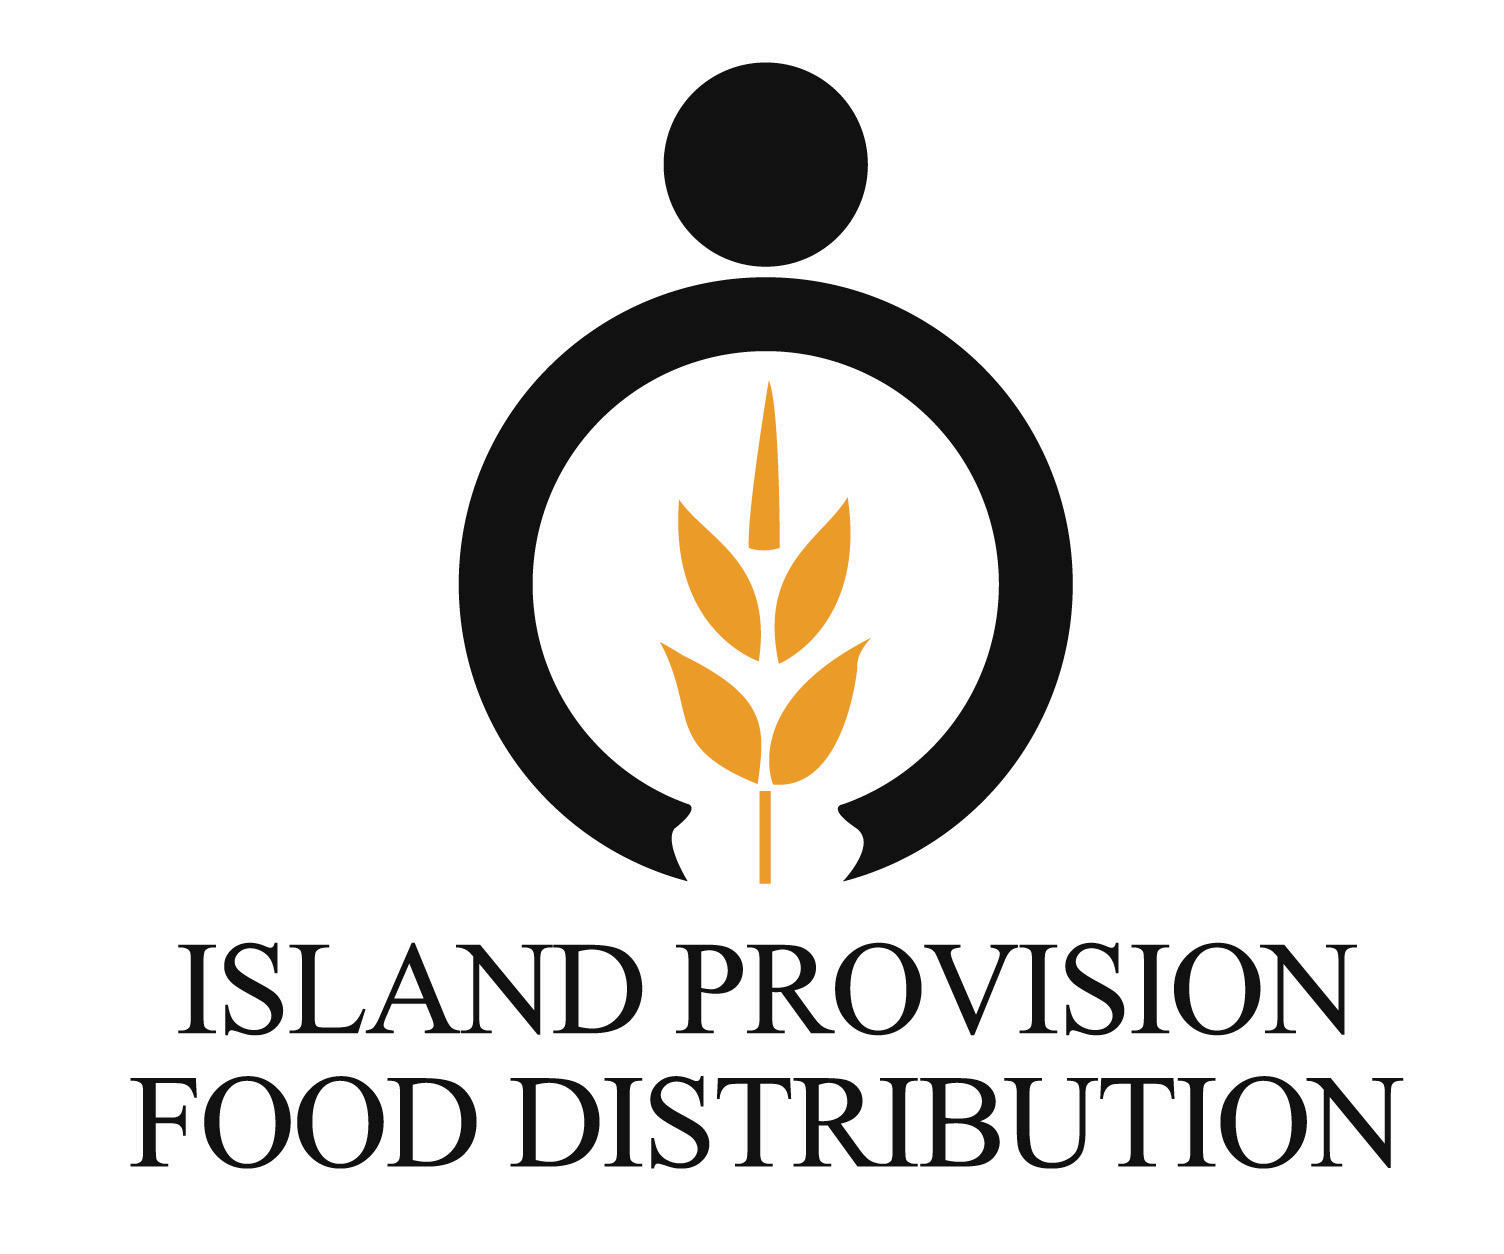 Island Provision Group logo. Island Provision Food Distribution.